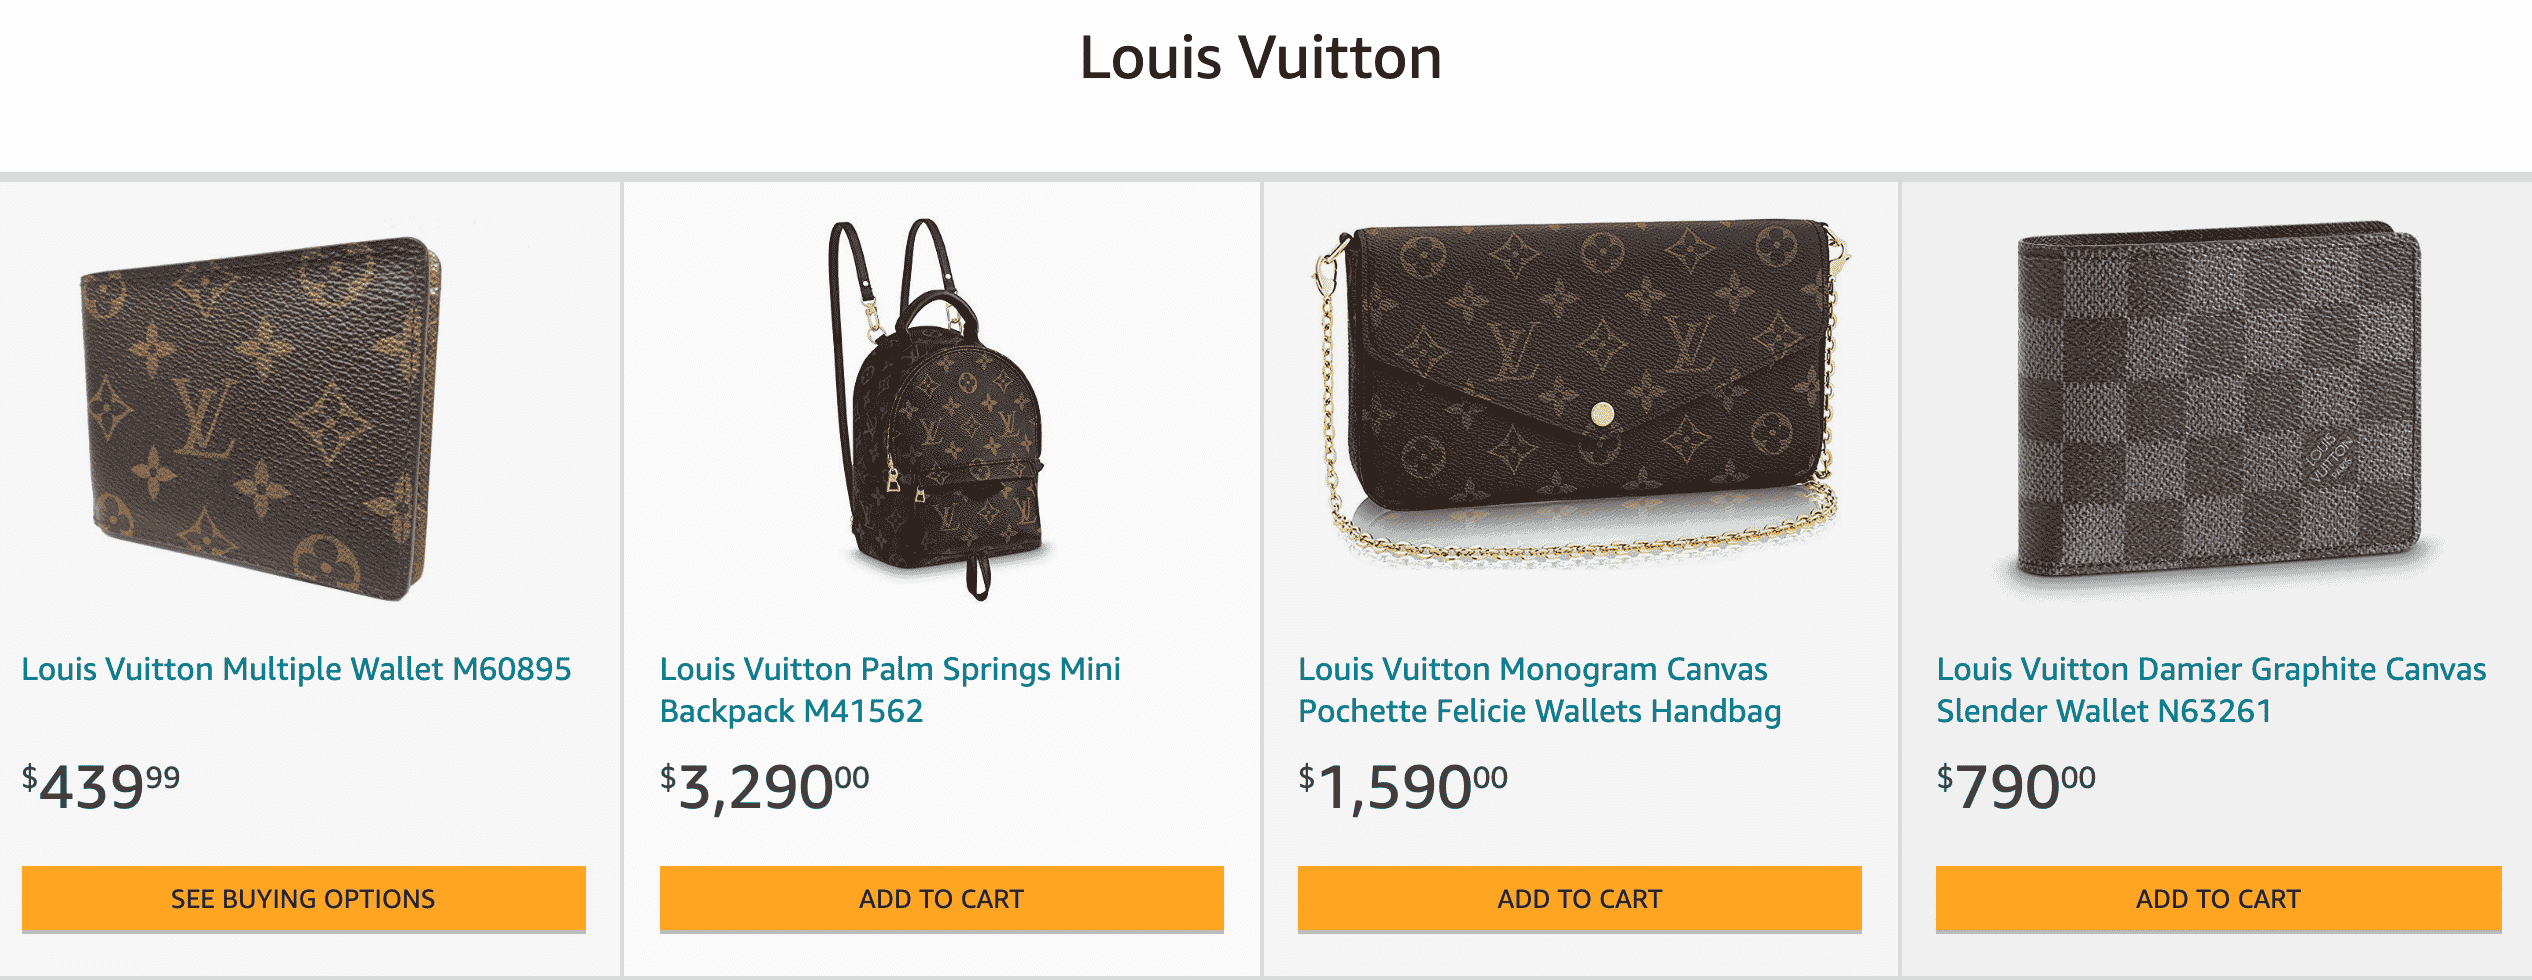 Louis Vuitton  BrandStruck: Brand Strategy / Positioning Case Studies